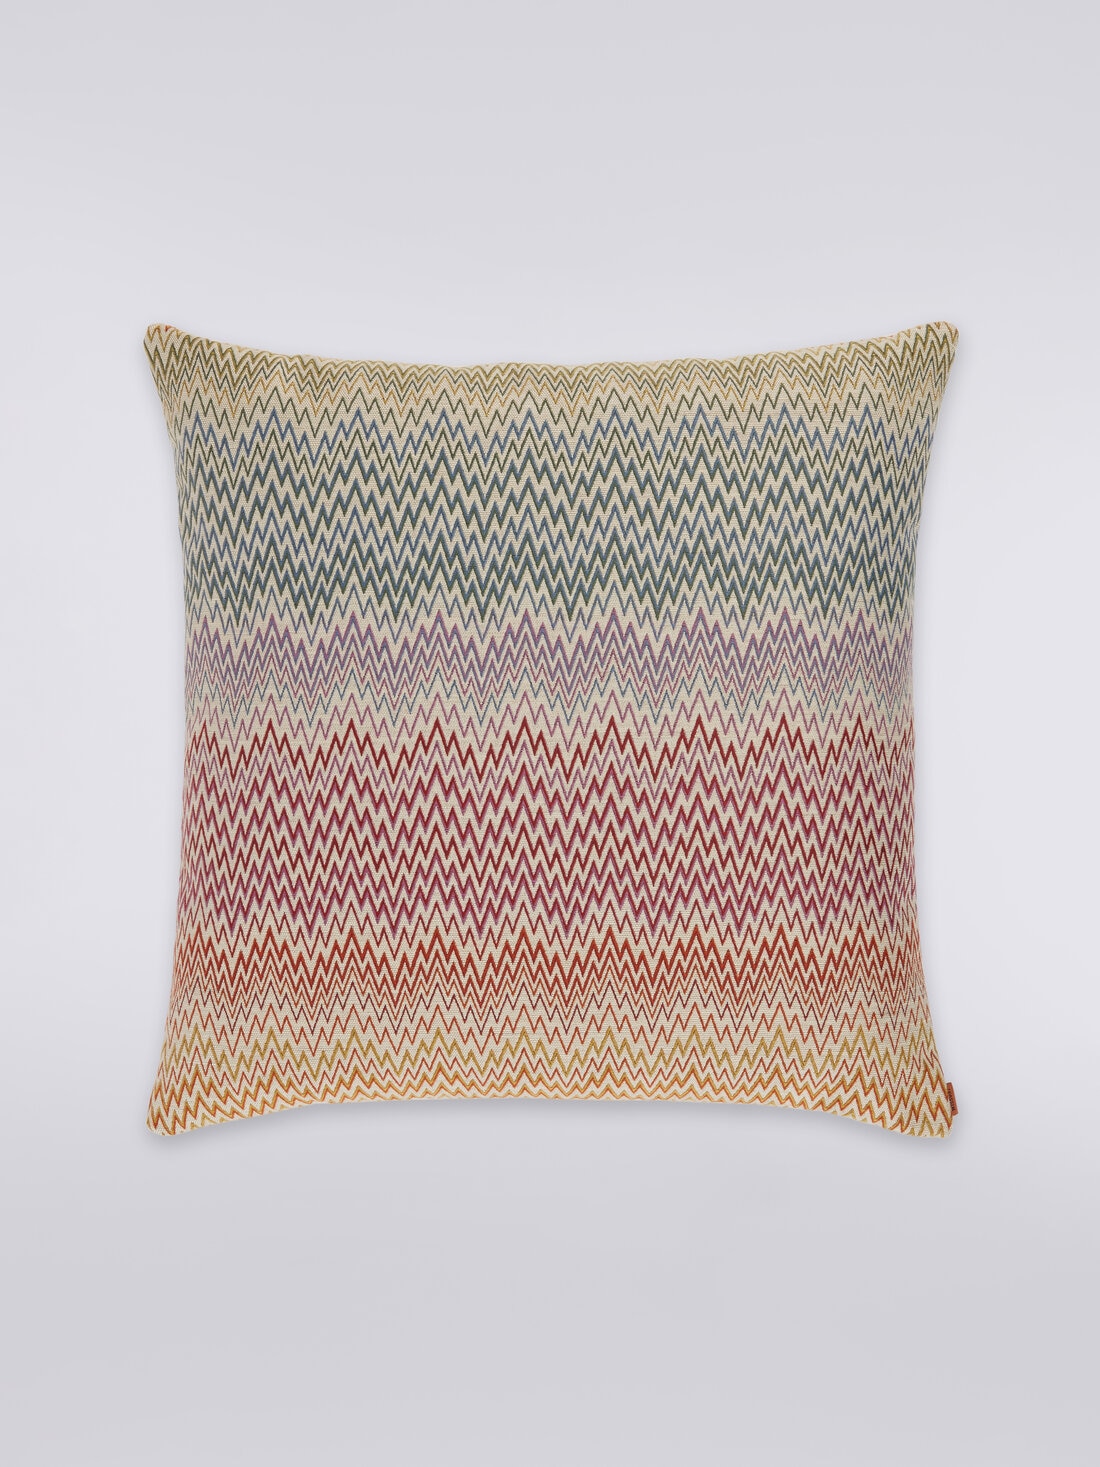 Arras cushion 60x60 cm, Multicoloured  - 8051275499817 - 0